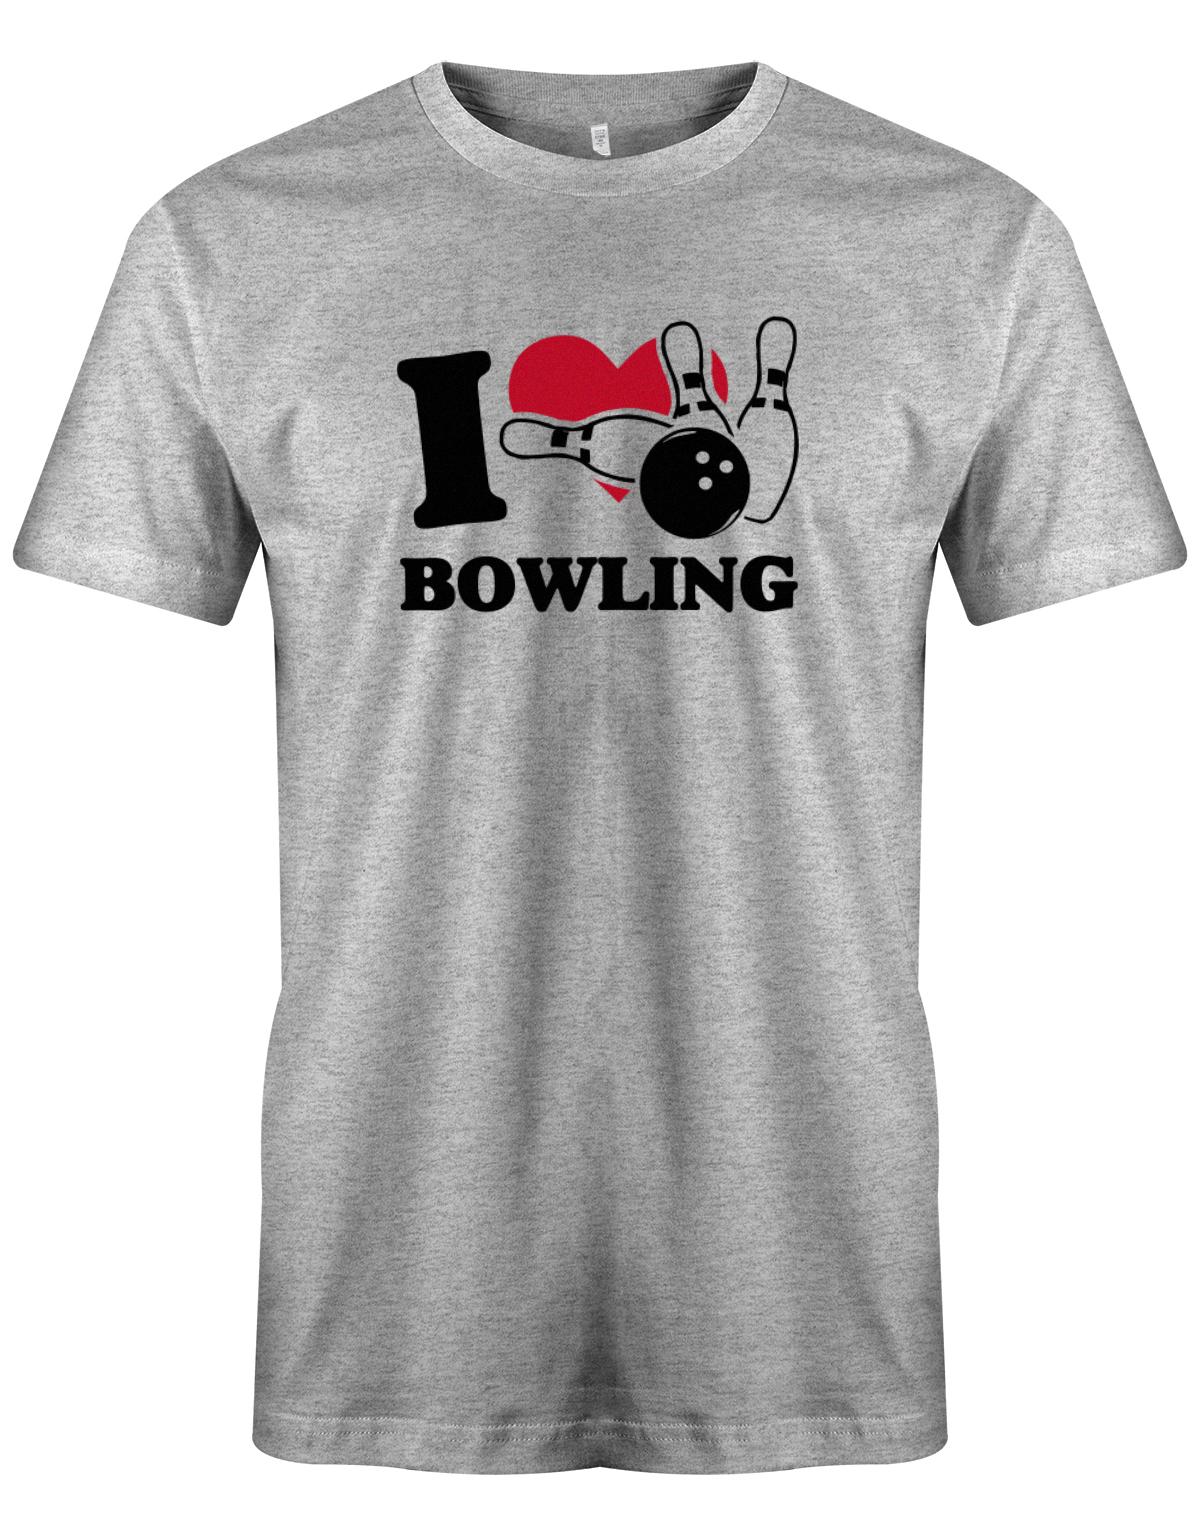 I-LOve-Bowling-Herren-Shirt-Grau